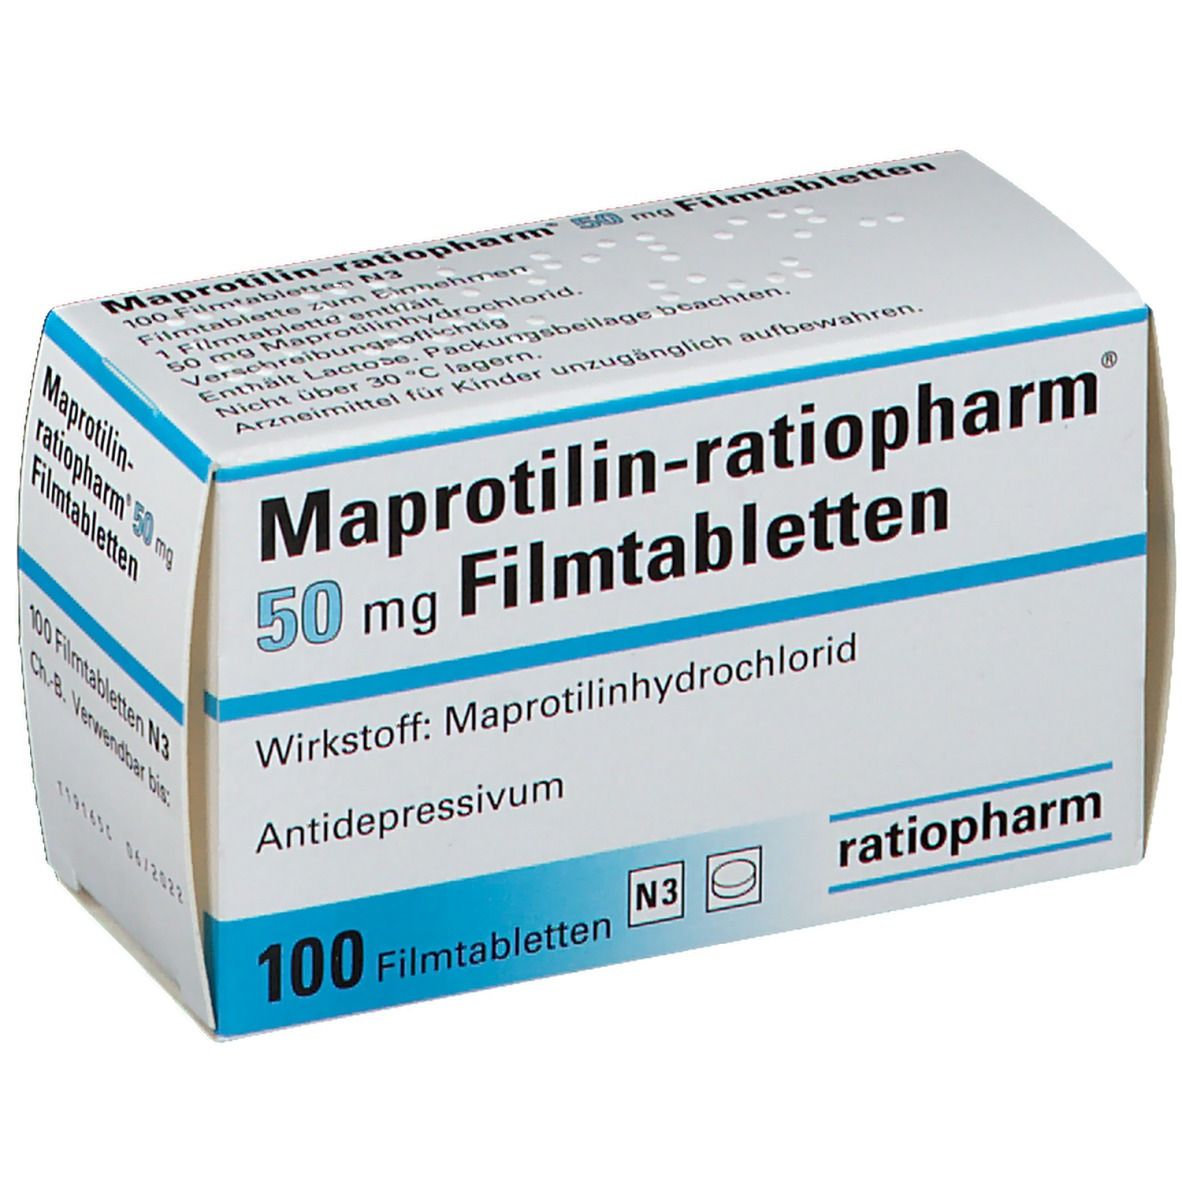 Maprotilin-ratiopharm® 50 mg